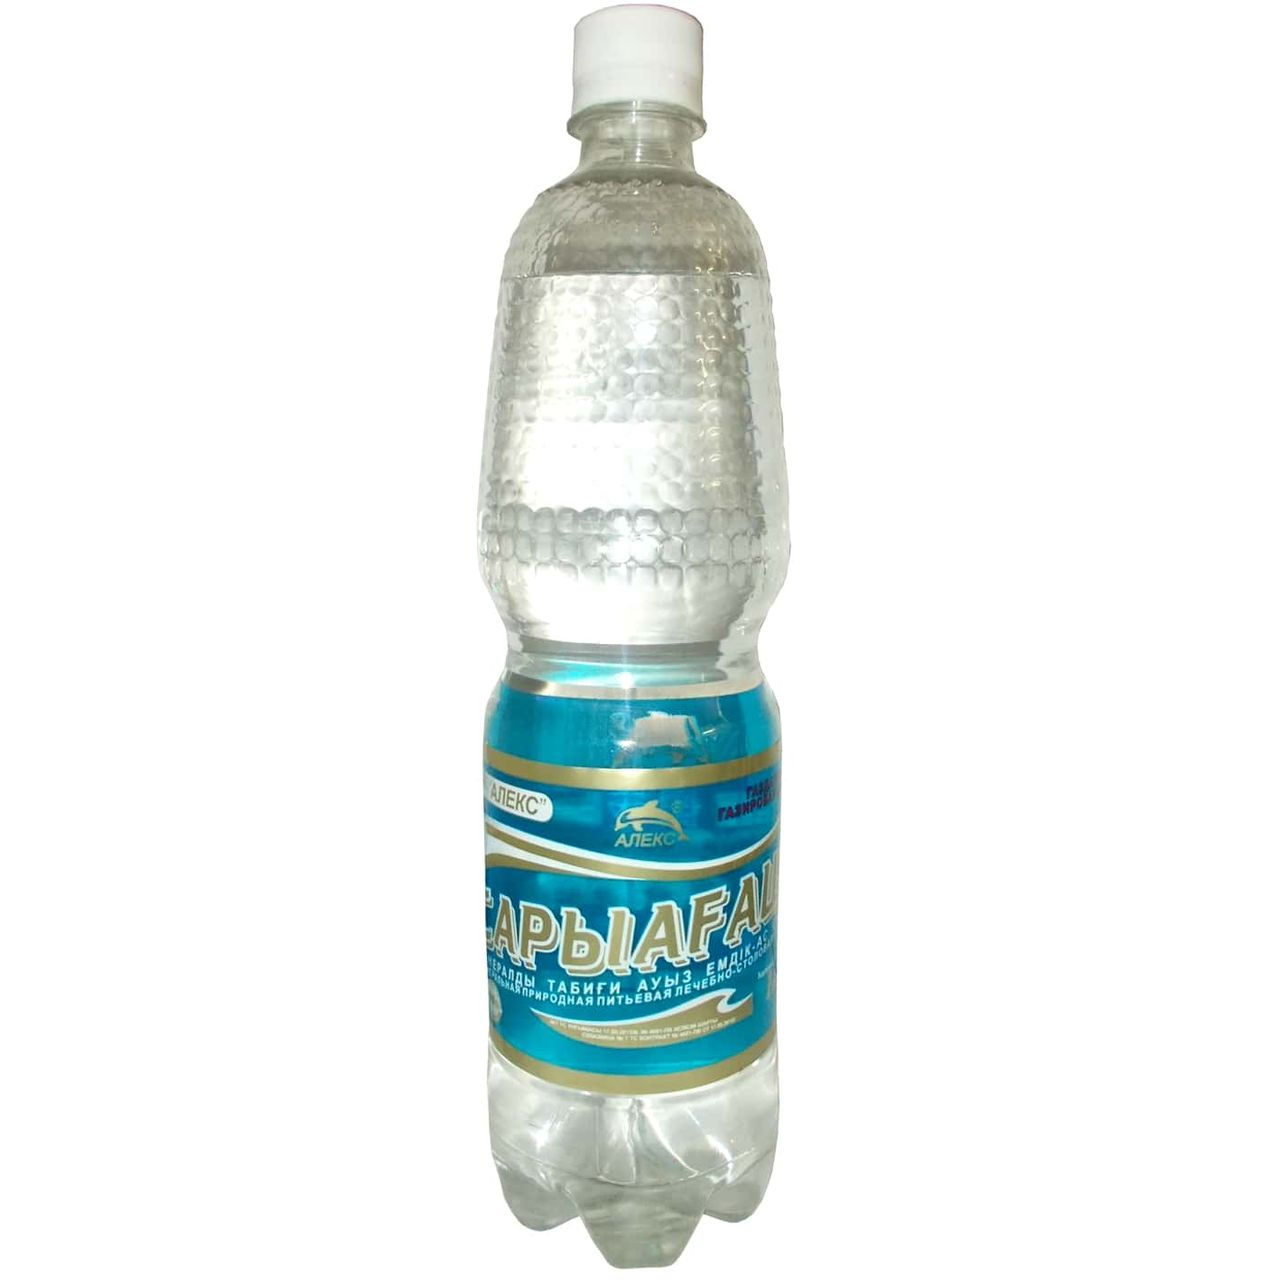 Вода на казахском языке